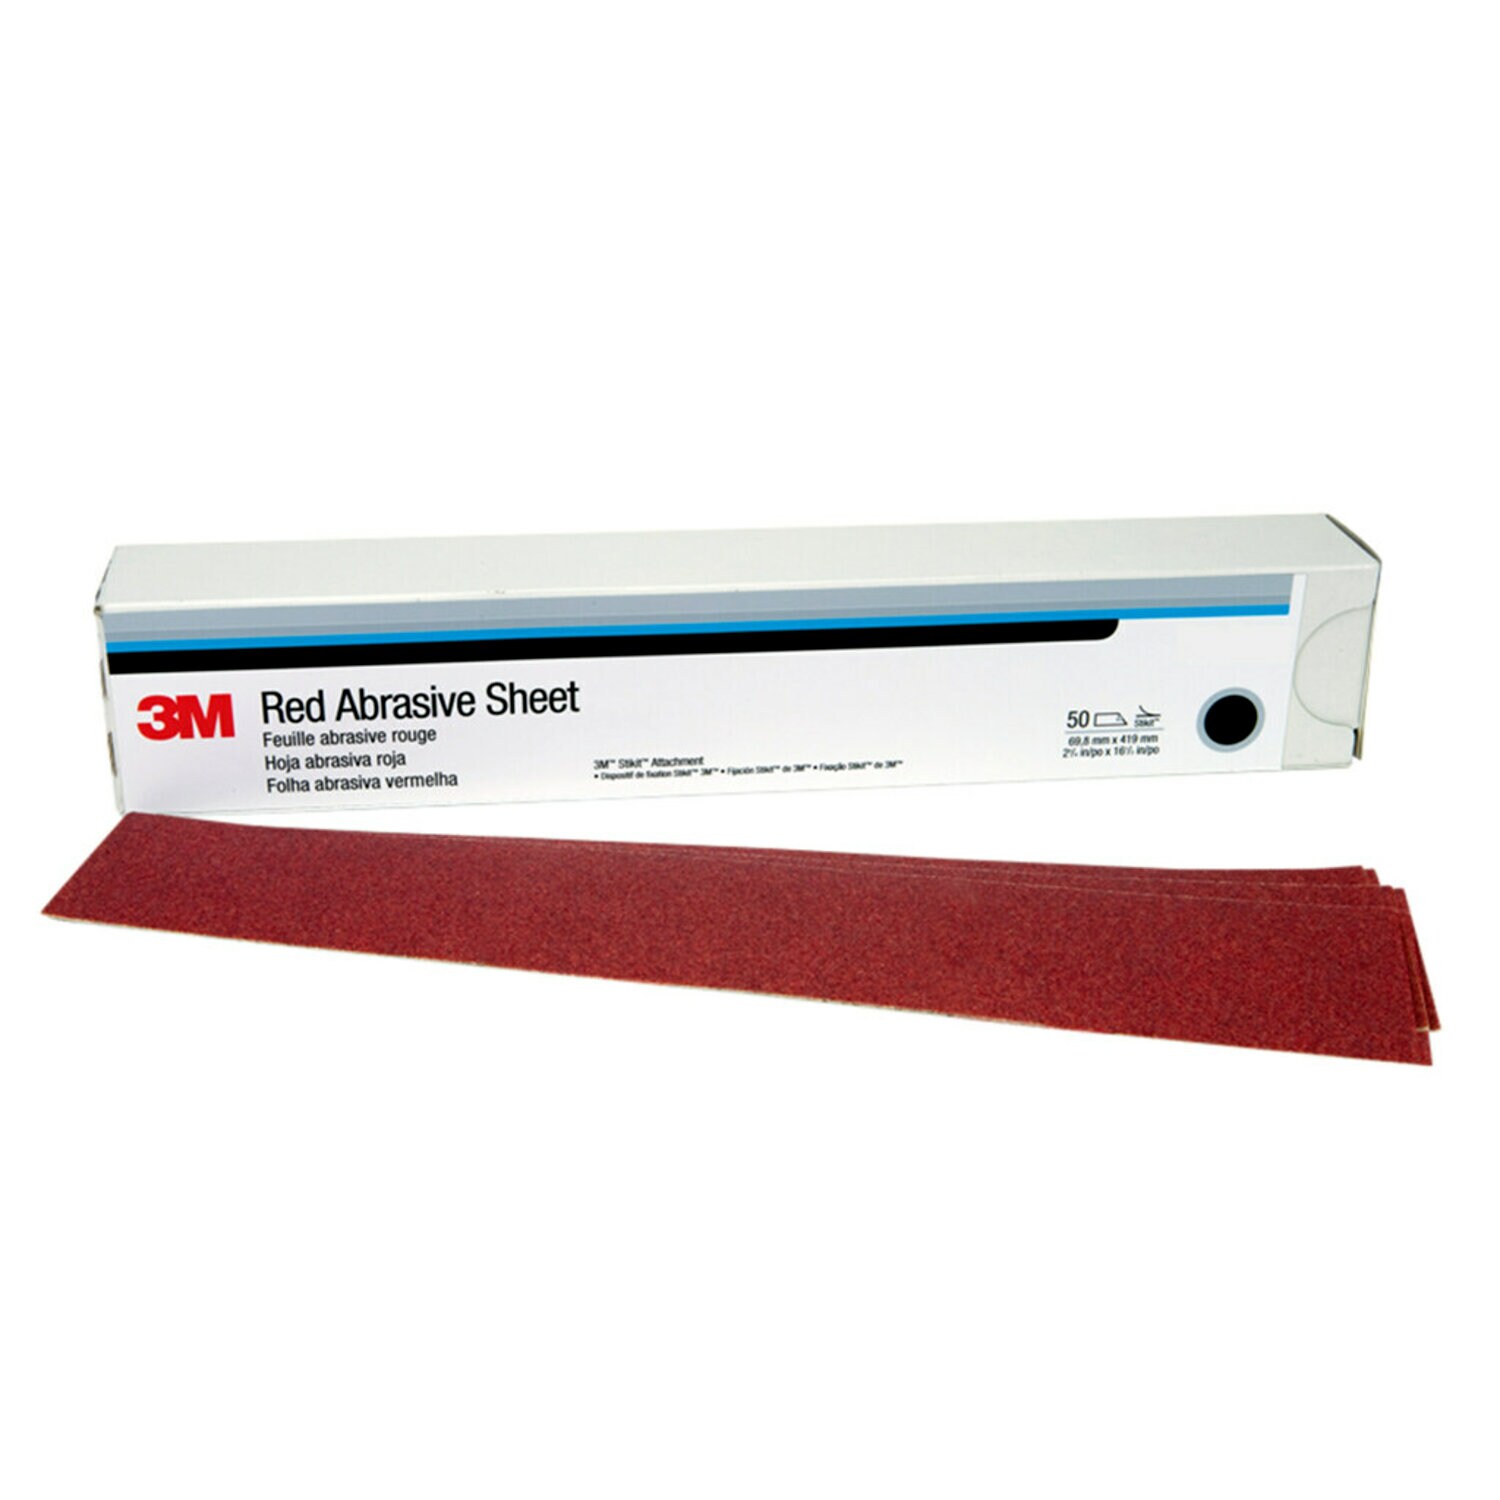 7000119797 - 3M Hookit Red Abrasive Sheet, 01182, 40, 2-3/4 in x 16 1/2 in, 25
sheets per carton, 5 cartons per case